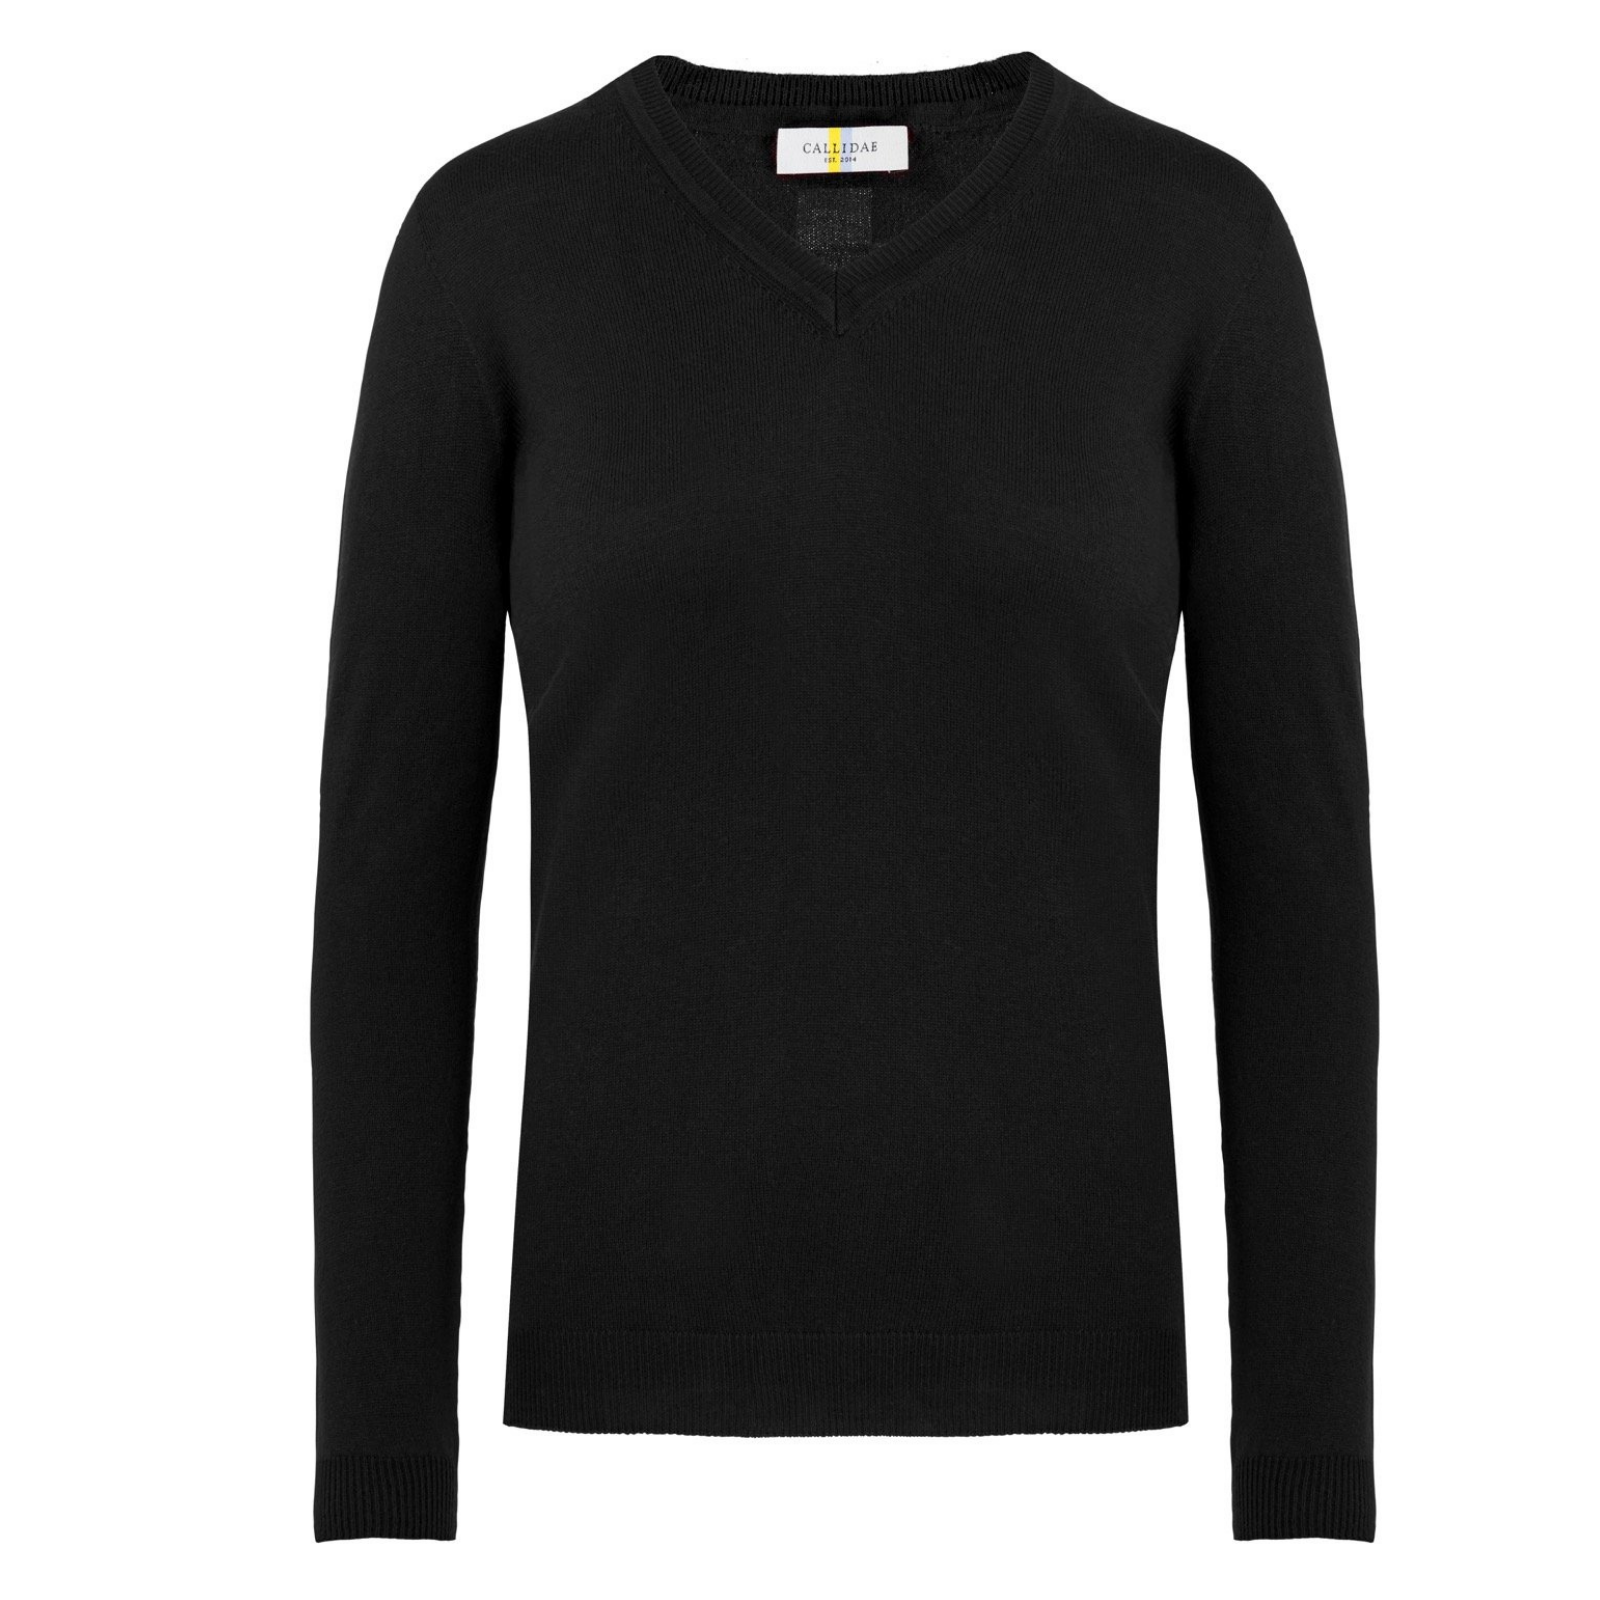 CALLIDAE The V Neck Sweater in Black - Women's Medium